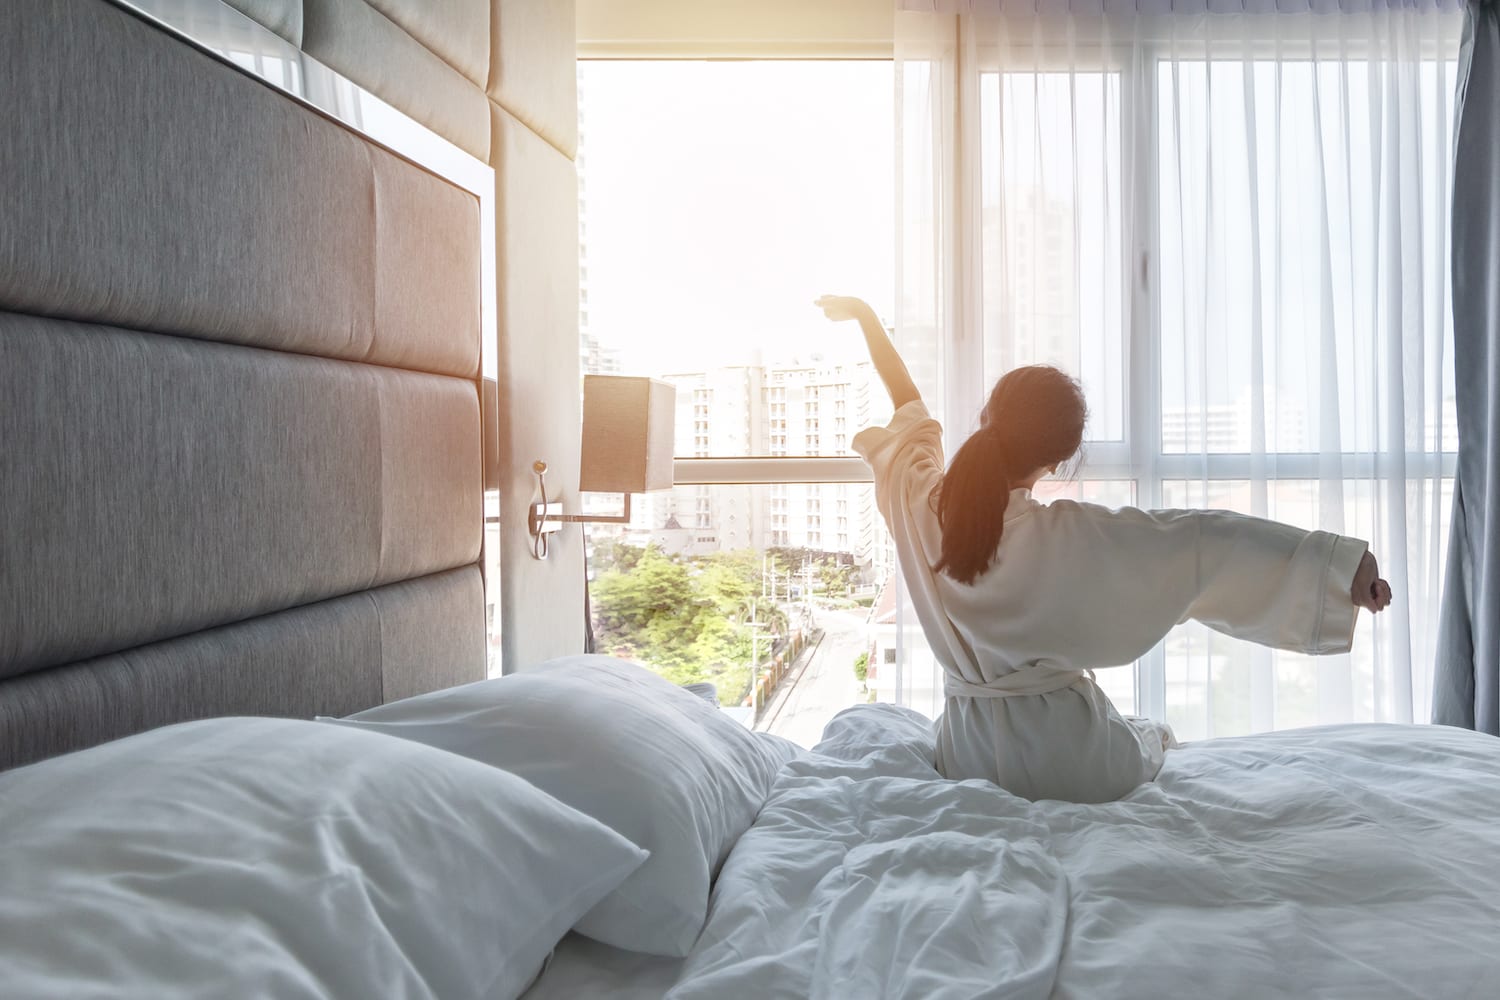 How to Get a Good Night's Sleep in a Hotel | Sleep Foundation